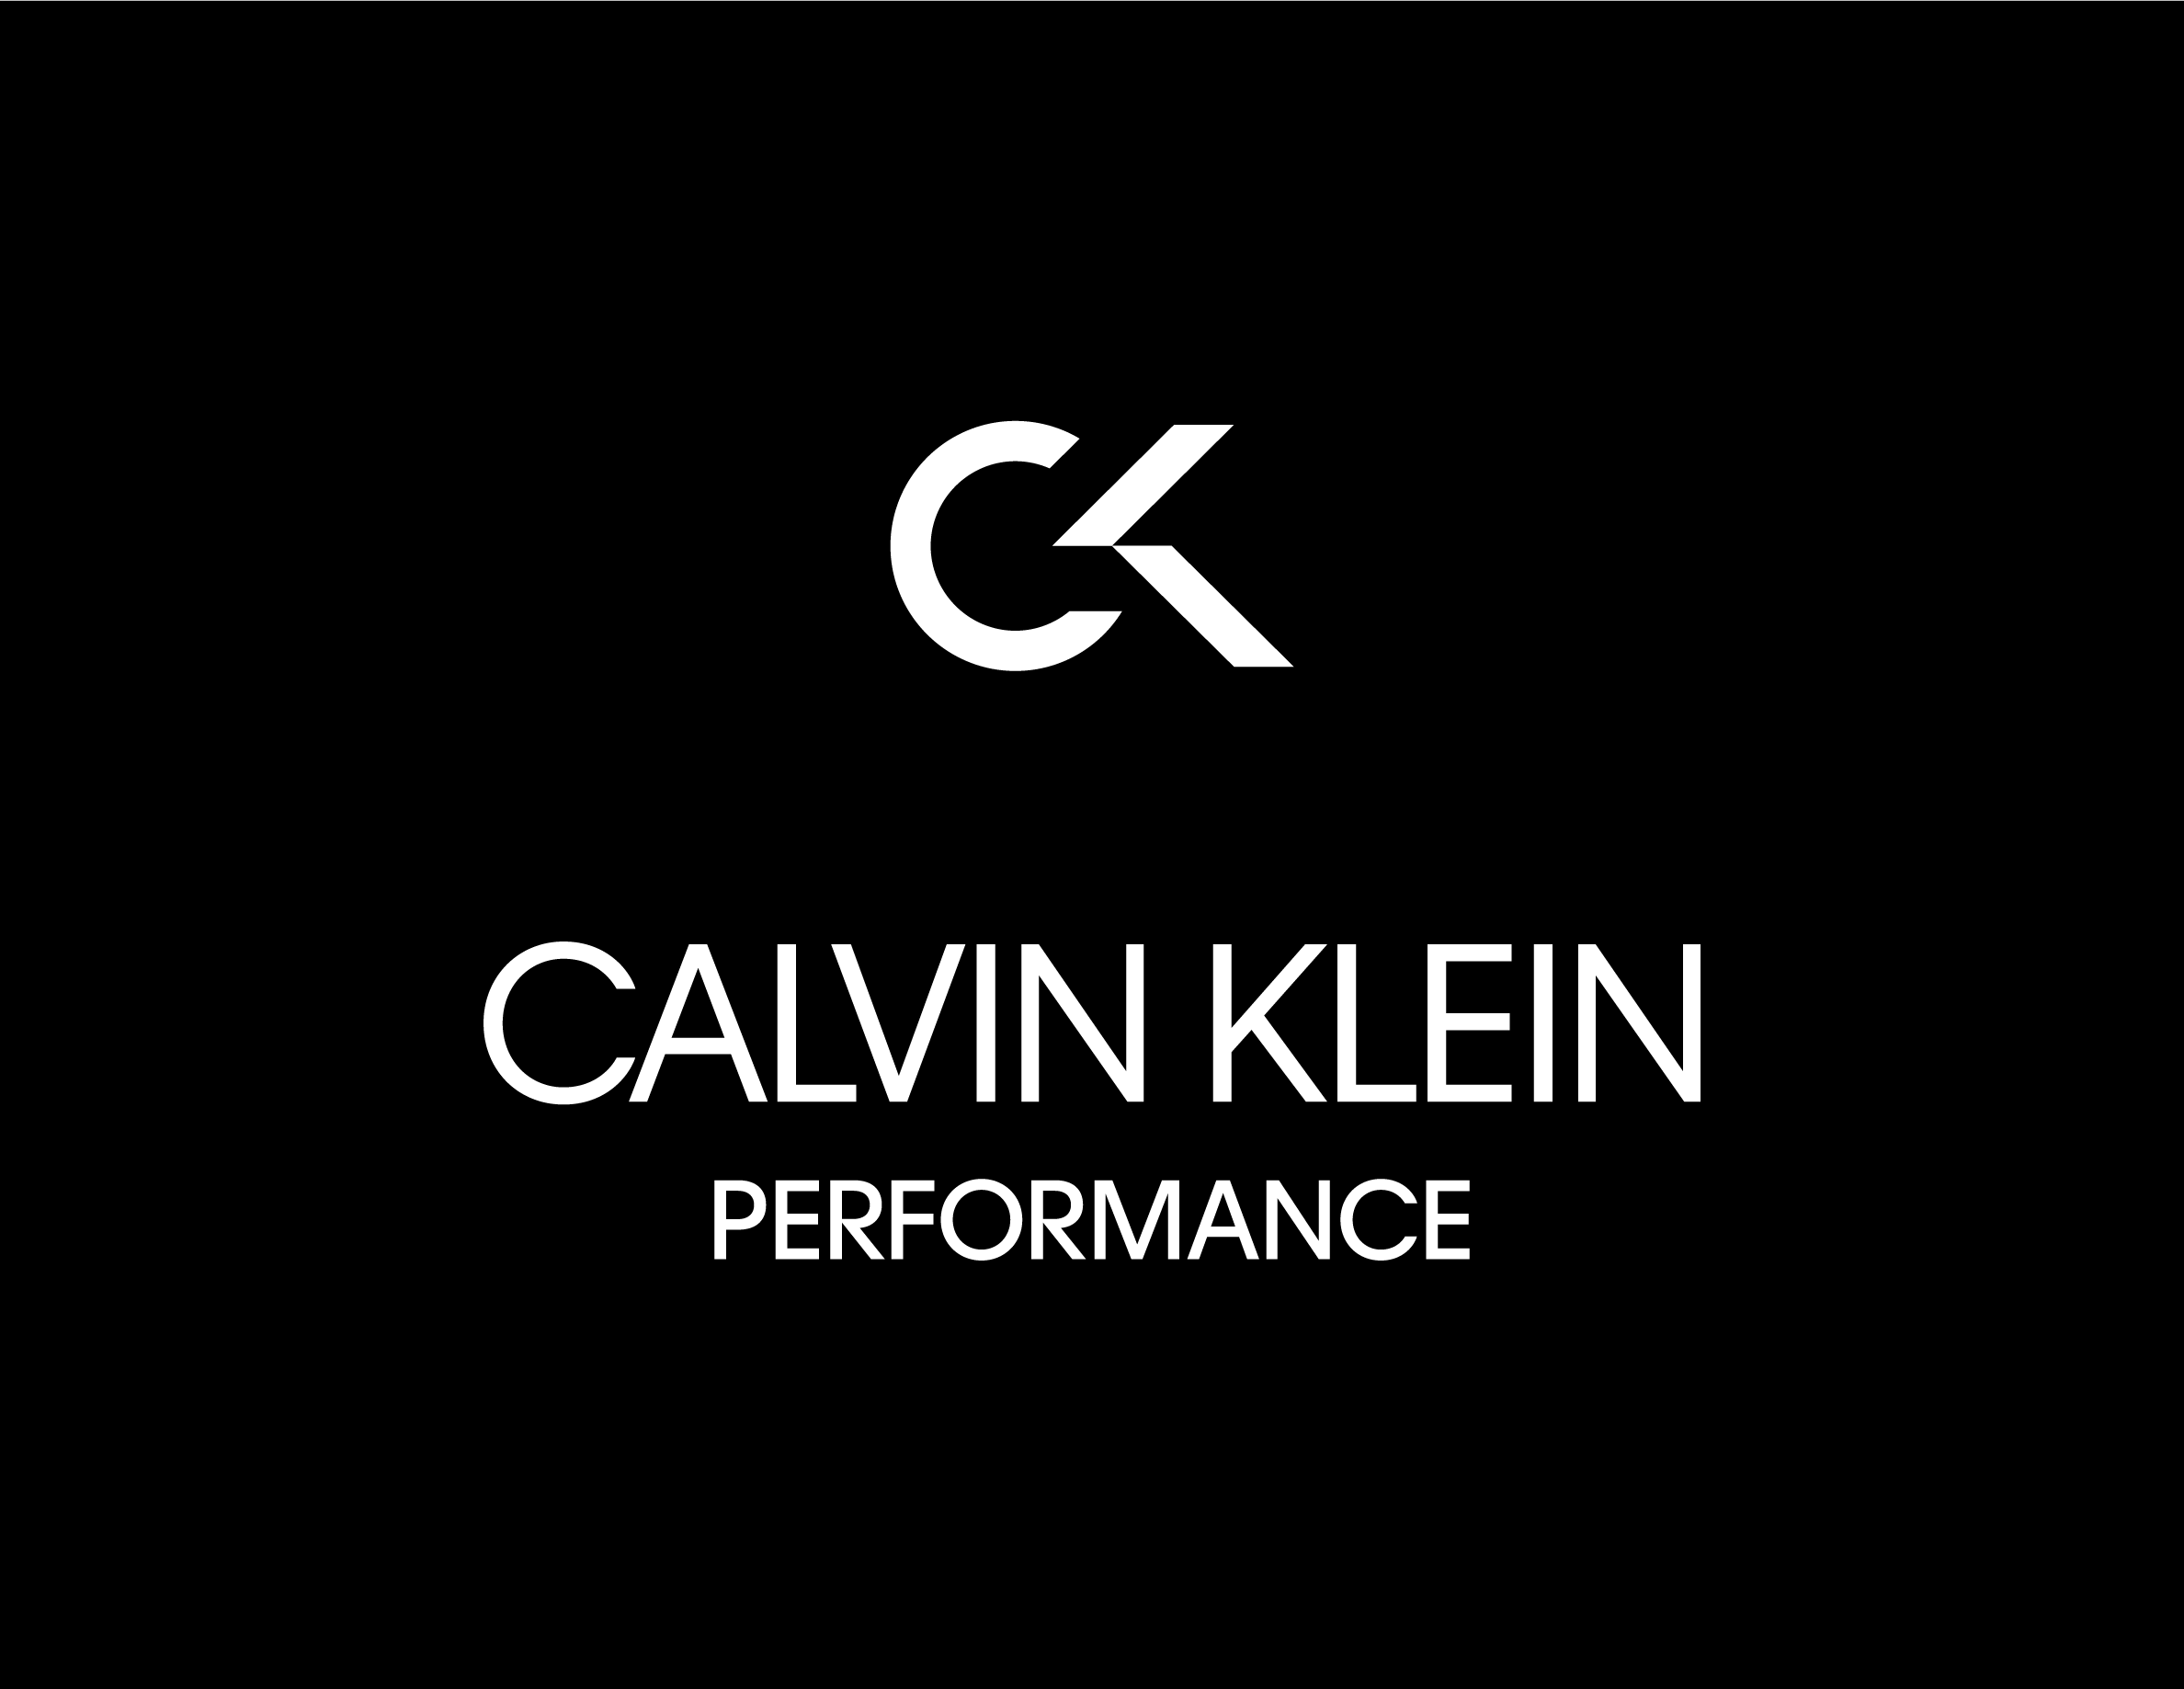 ck brand logo